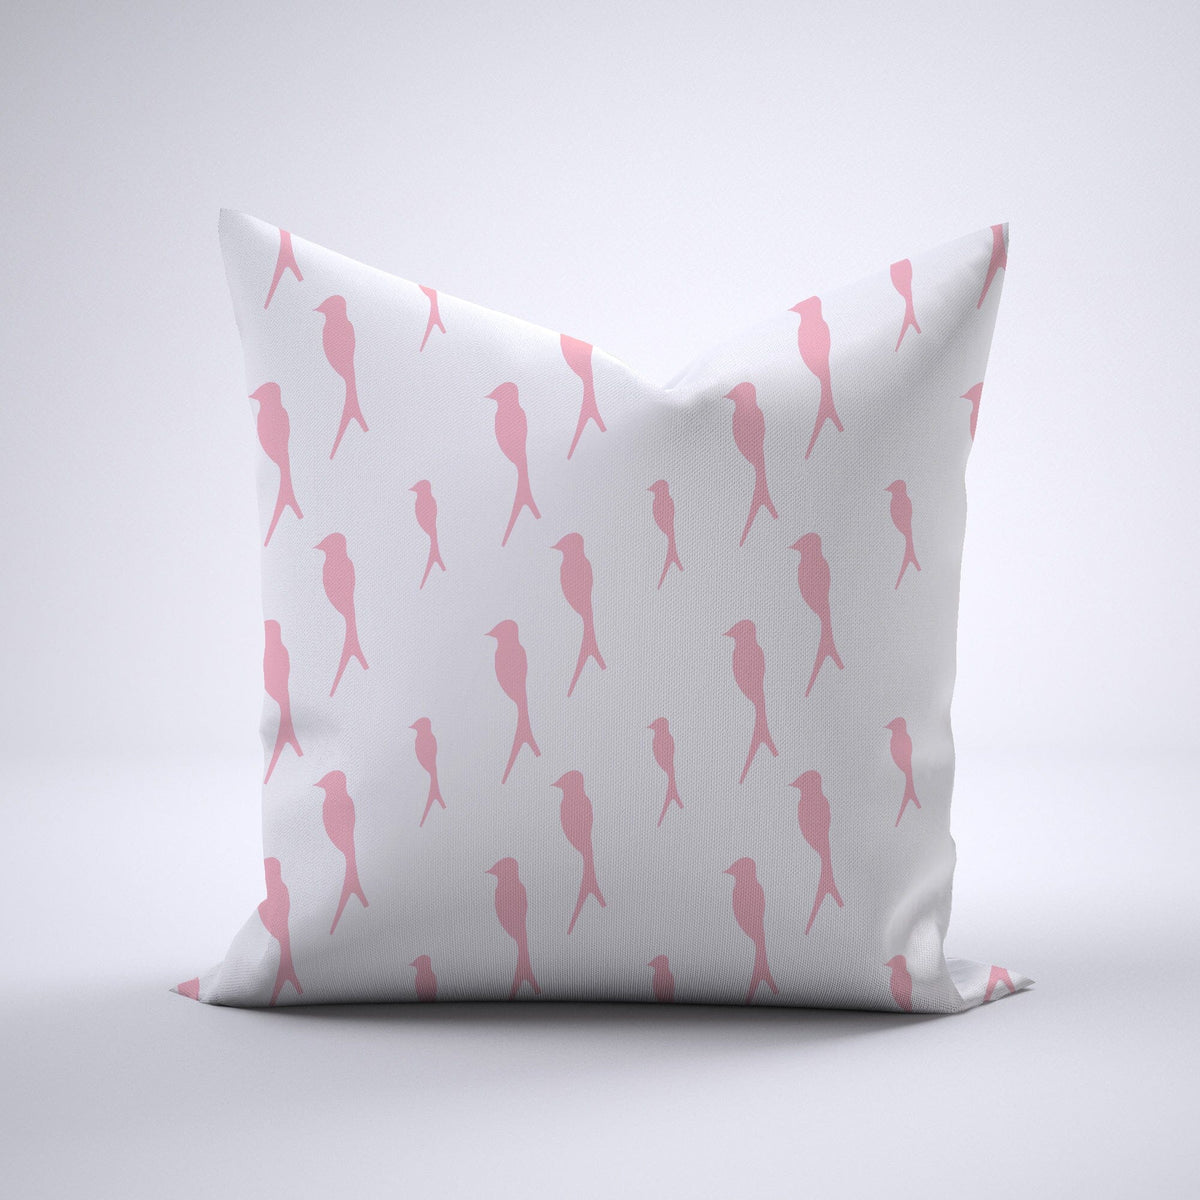 Throw Pillow - Birds of a Feather Pink Bedding Collections, Pillows, Throw Pillows MWW 